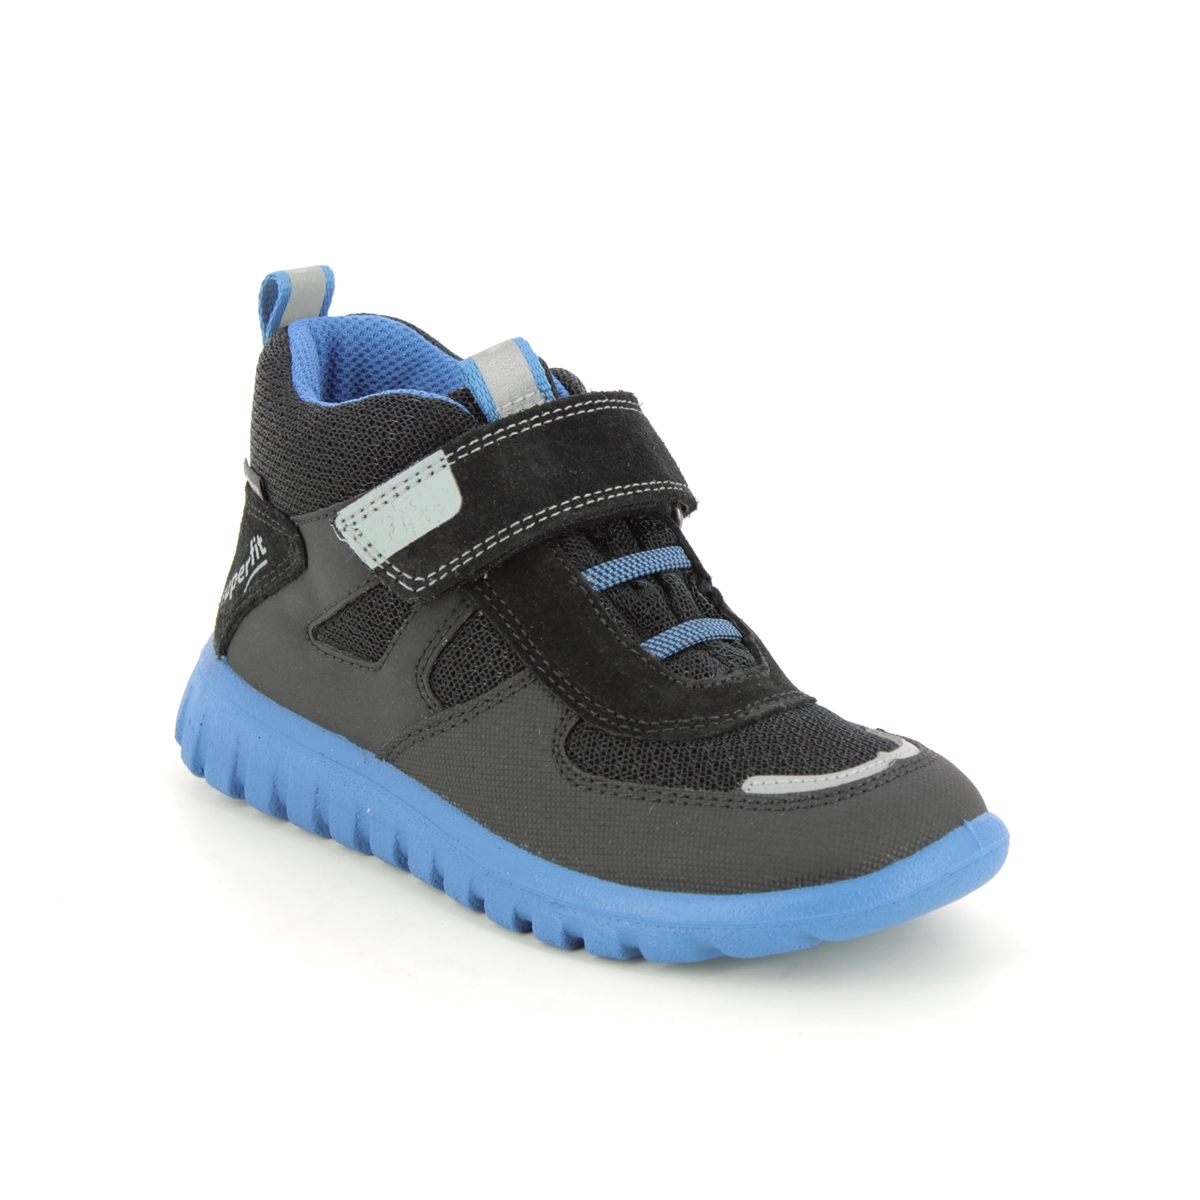 Superfit Sport7 Mini Gtx Black-Blue Kids Boys Boots 1006196-0000 In Size 23 In Plain Black-Blue For kids